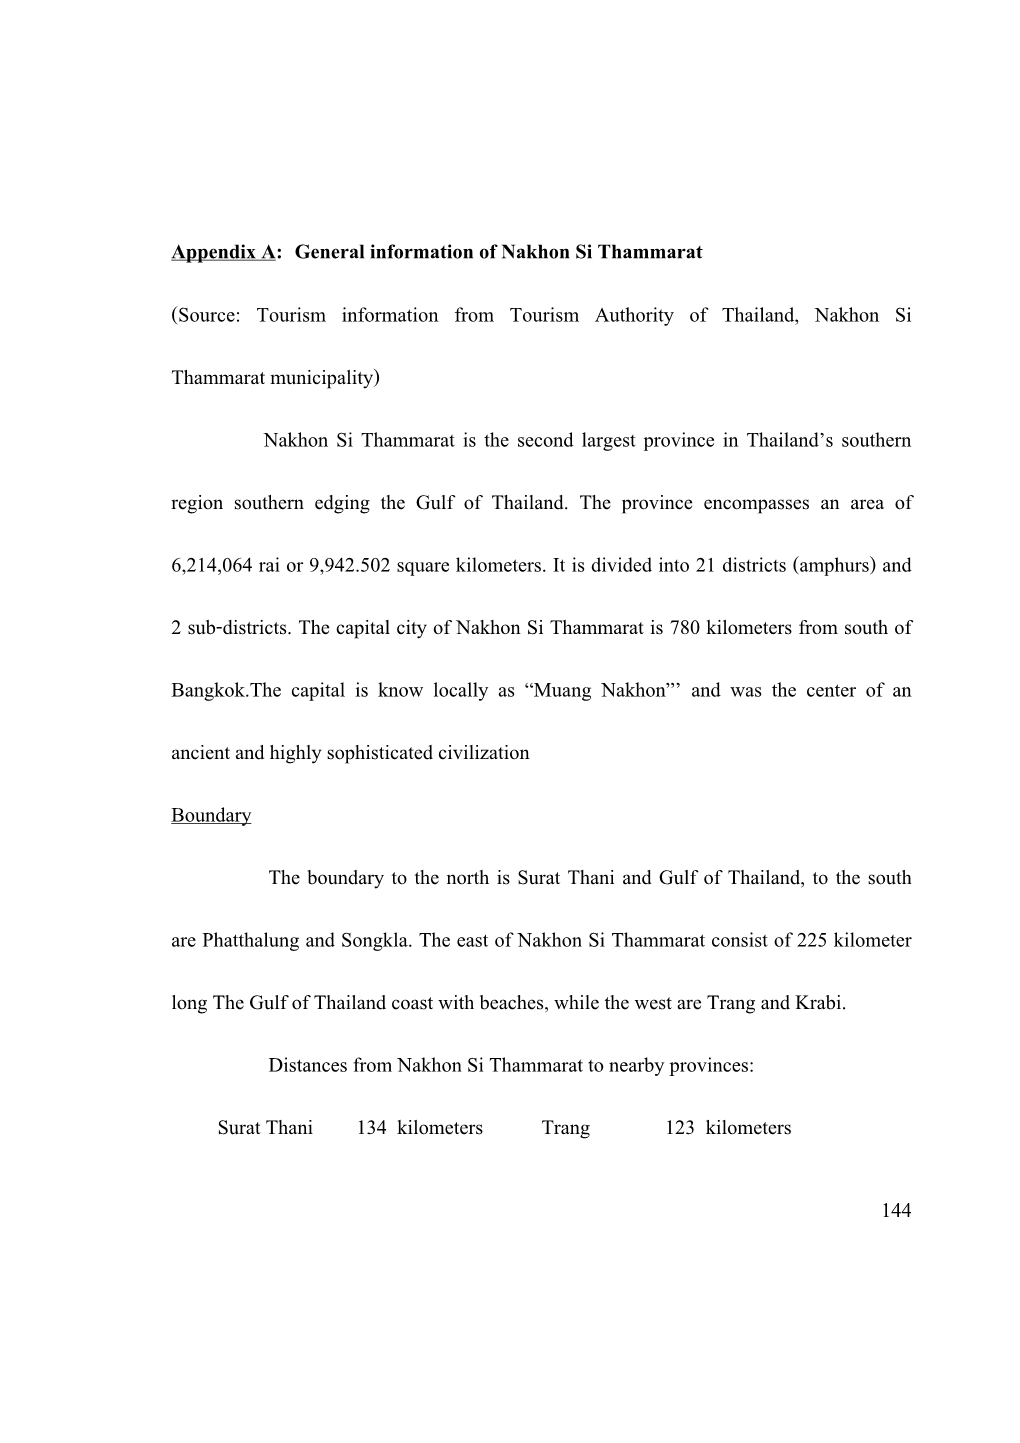 General Information of Nakhon Si Thammarat